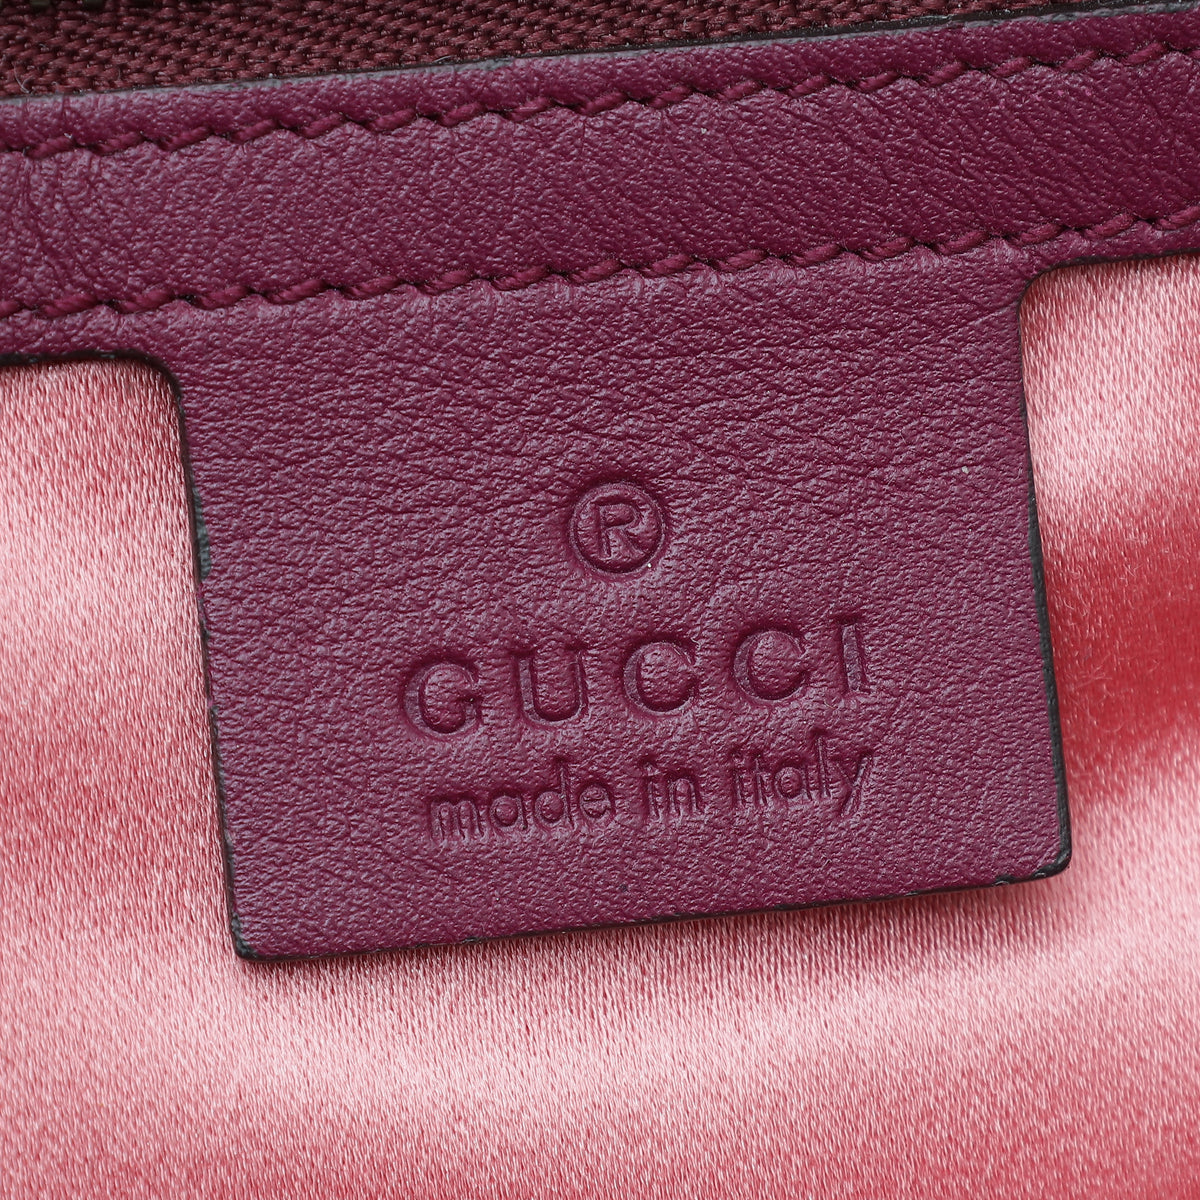 Gucci Violet Velvet GG Marmont Small Bag